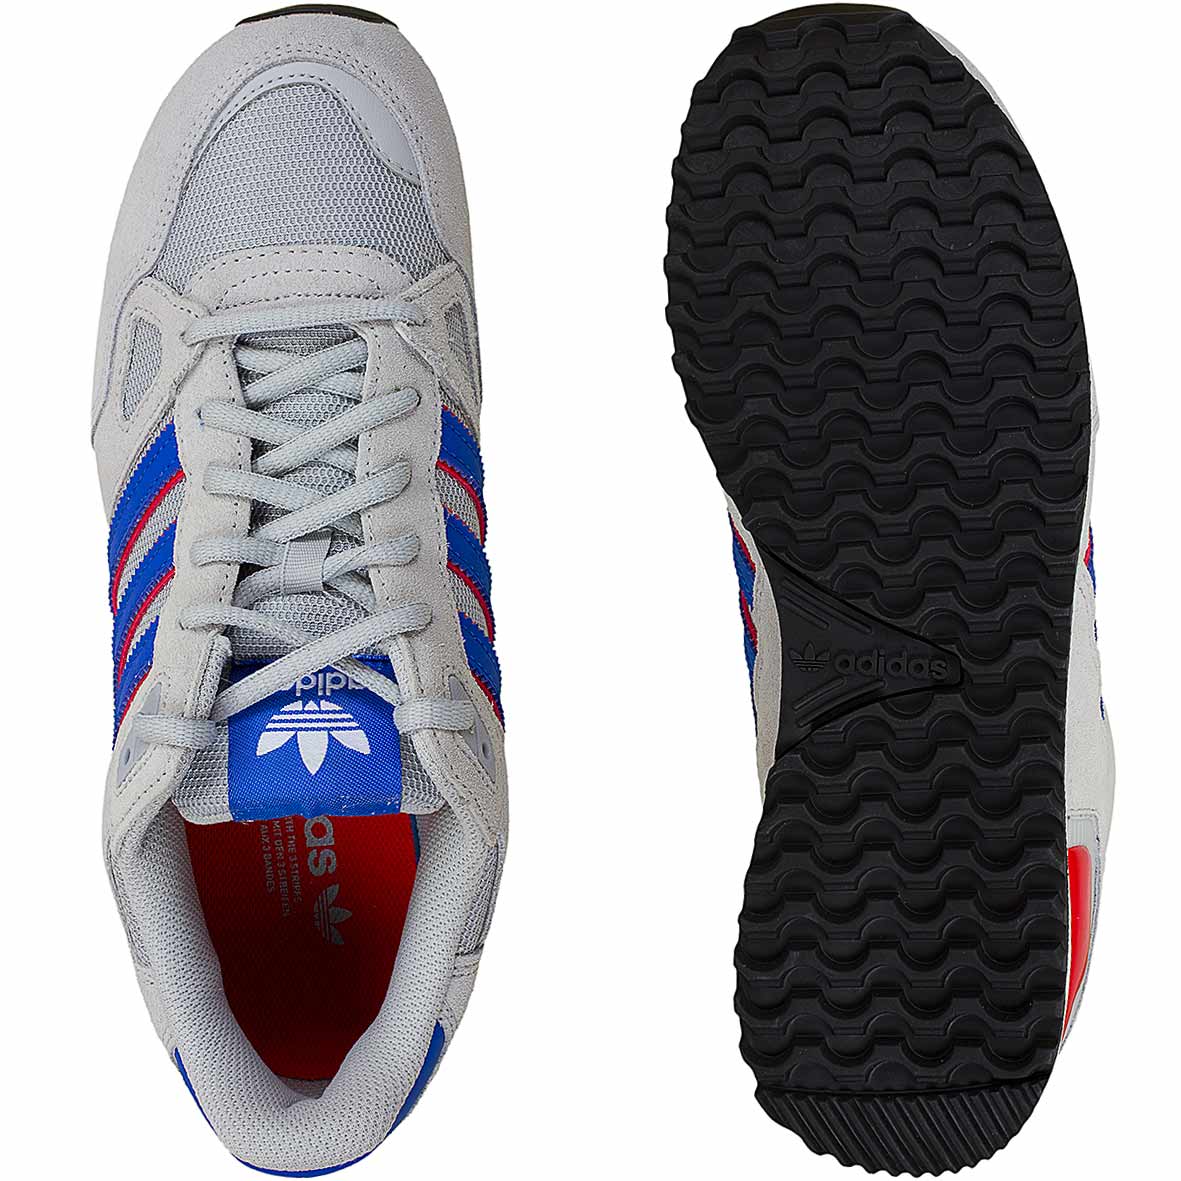 ☆ Adidas Originals Sneaker ZX 750 grau/blau - hier bestellen!